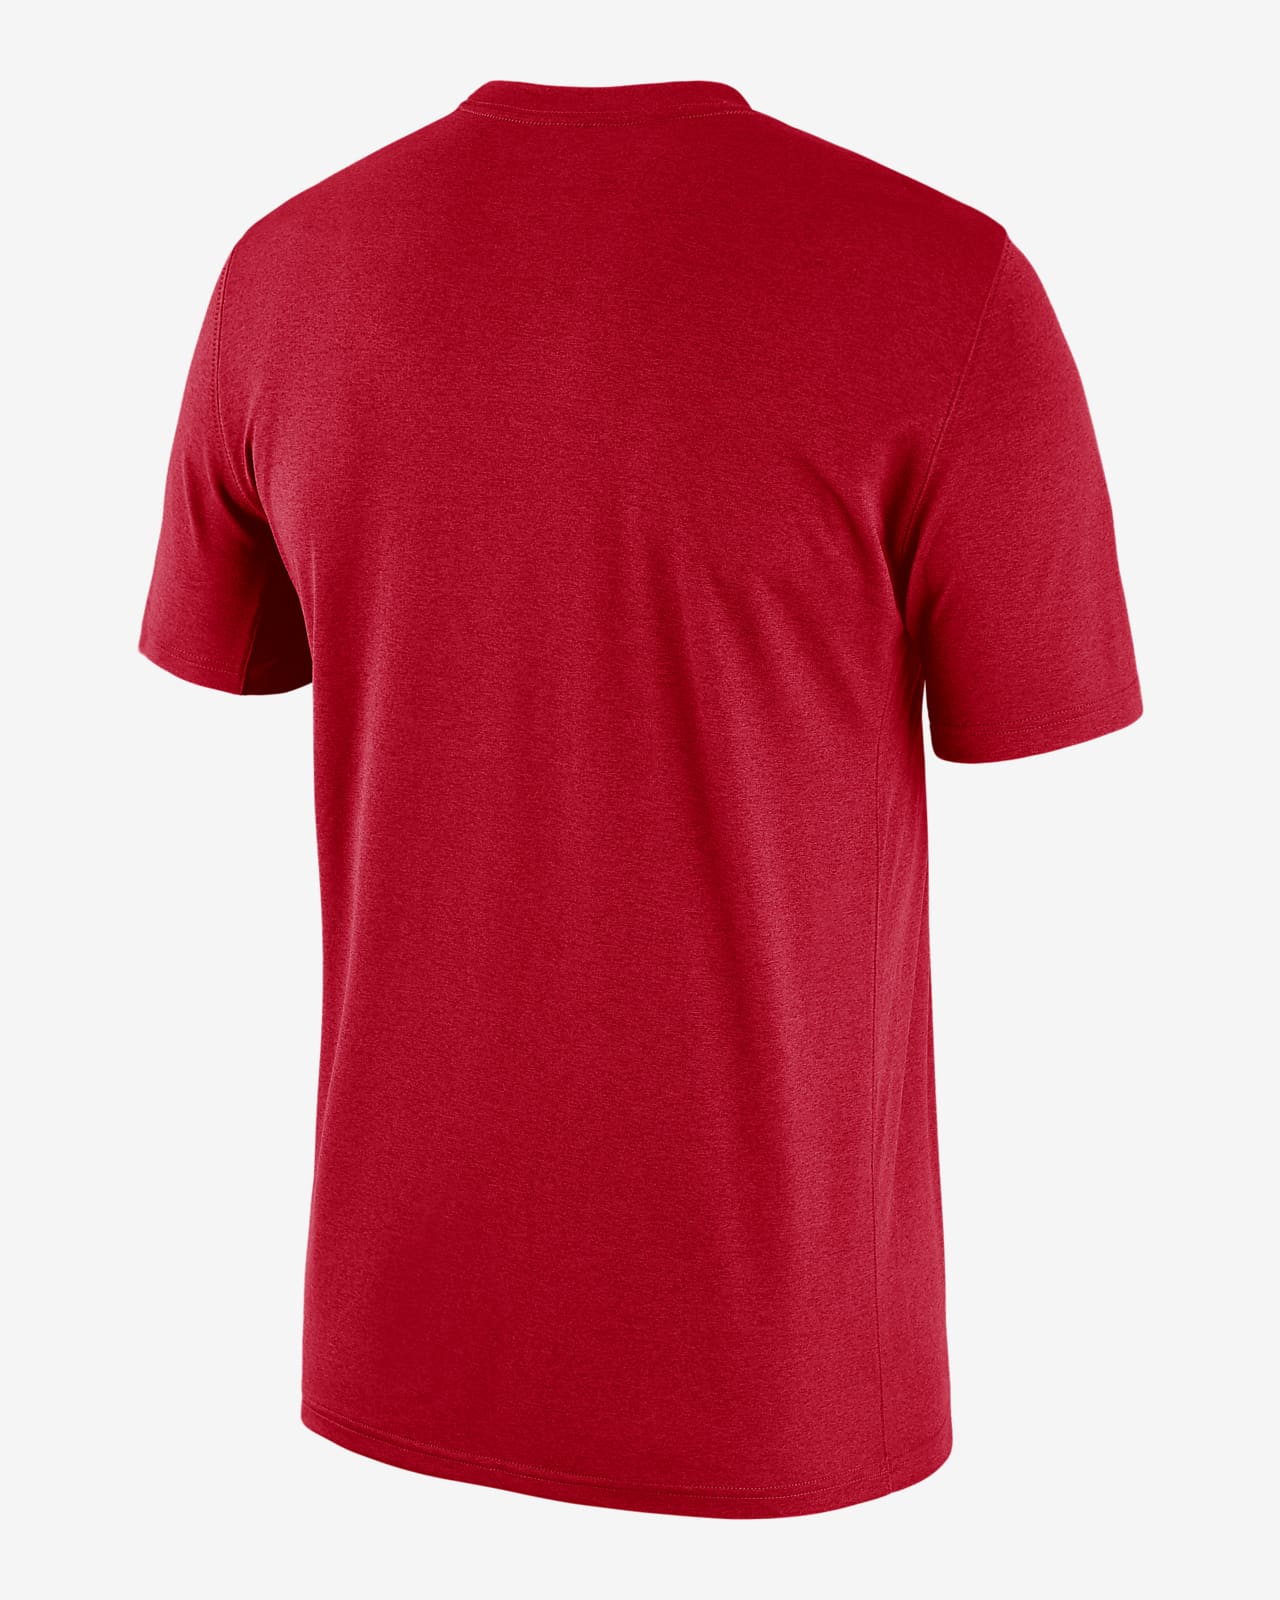 Portland Trail Blazers Men's Nike NBA Long-Sleeve T-Shirt